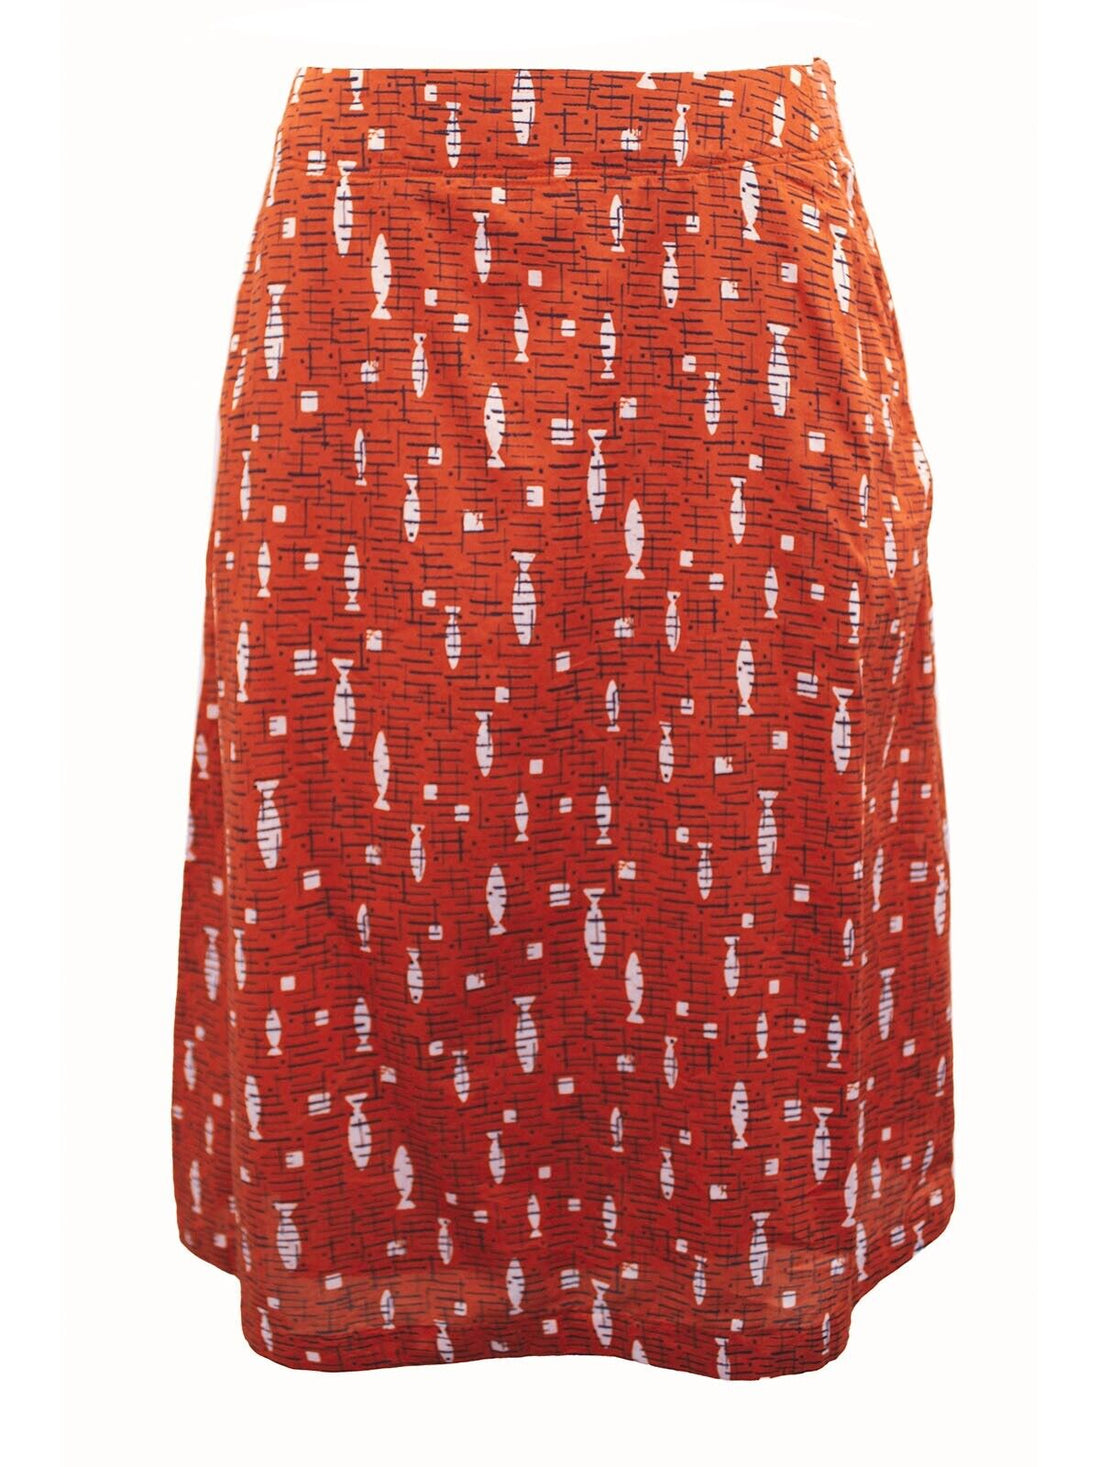 EX Seasalt Brick Red Paint Pot Skirt in Size 22 see description for measurements